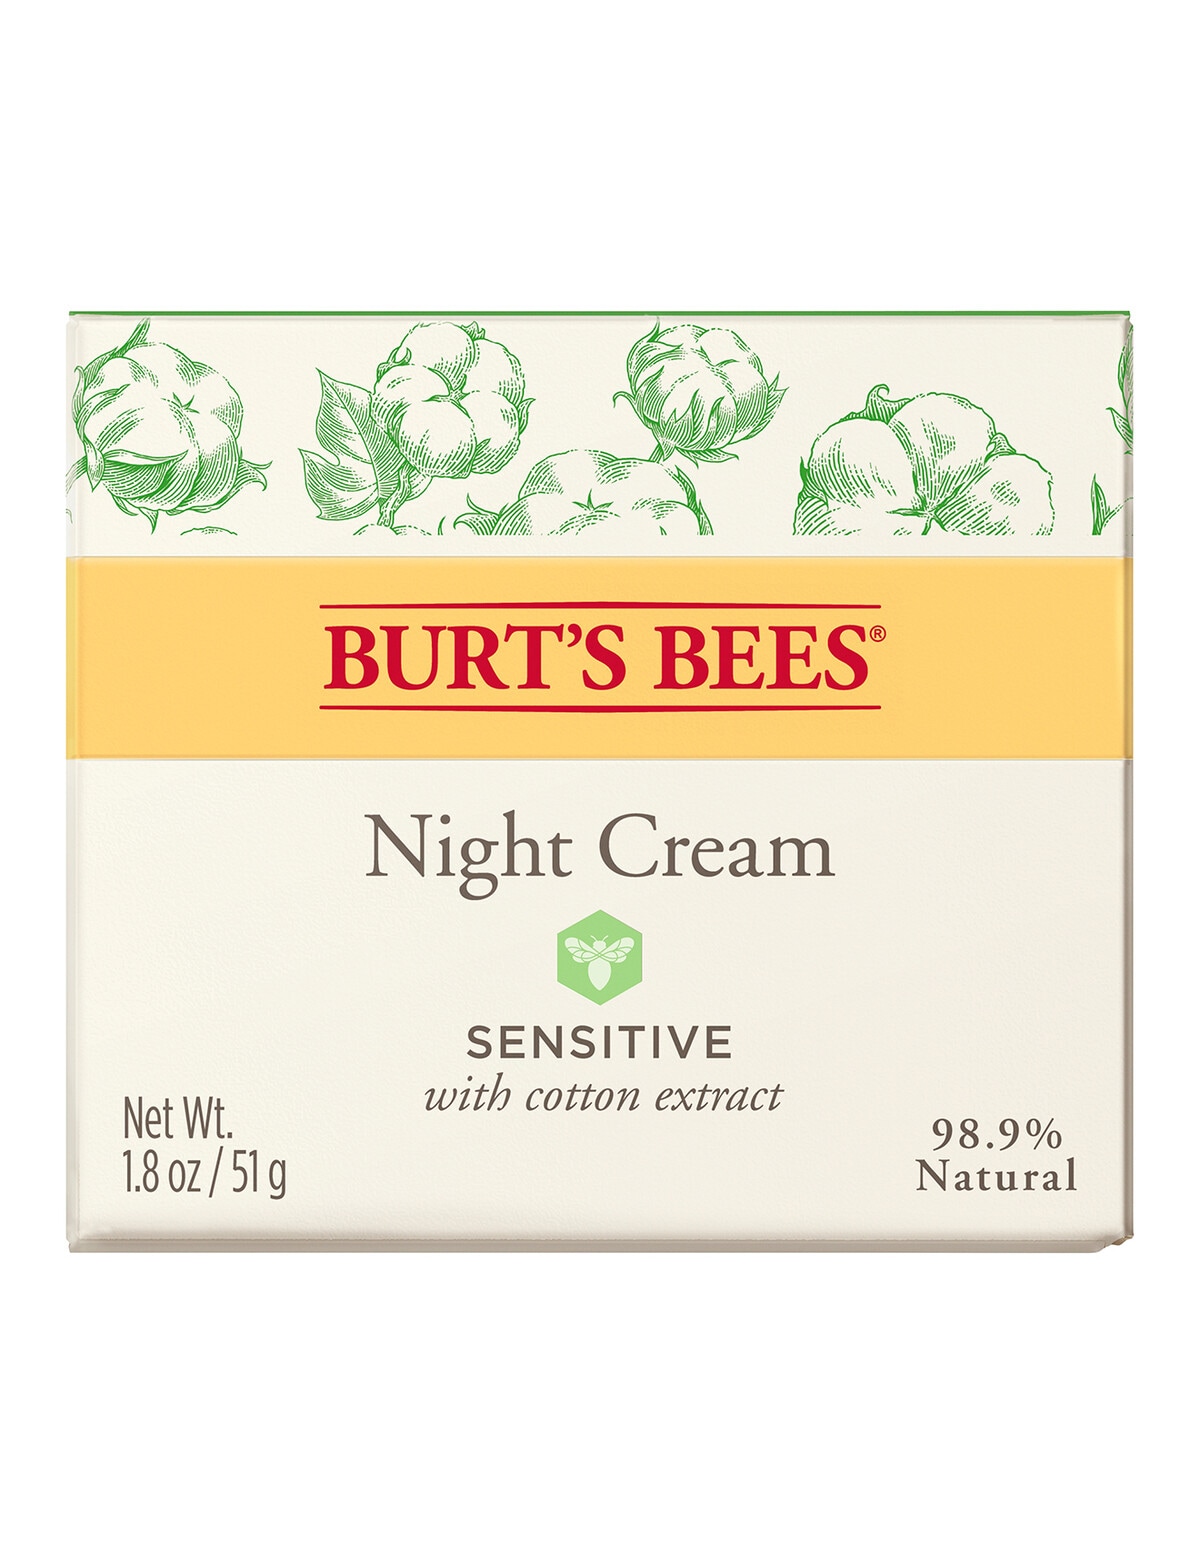 Burts Bees Sensitive Night Cream (50g)